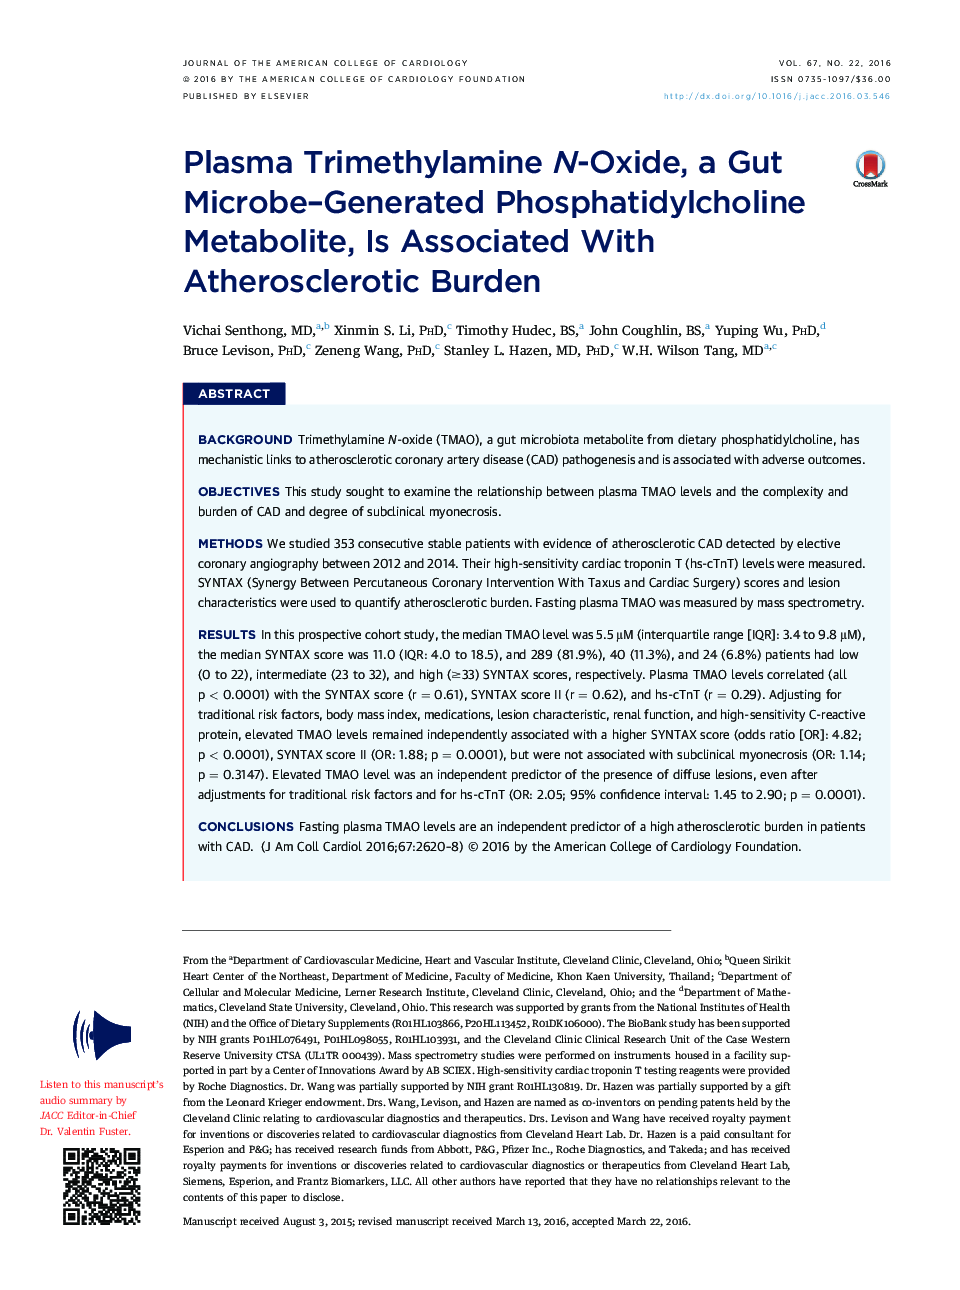 Plasma Trimethylamine N-Oxide, a Gut Microbe-Generated Phosphatidylcholine Metabolite, Is Associated With Atherosclerotic Burden